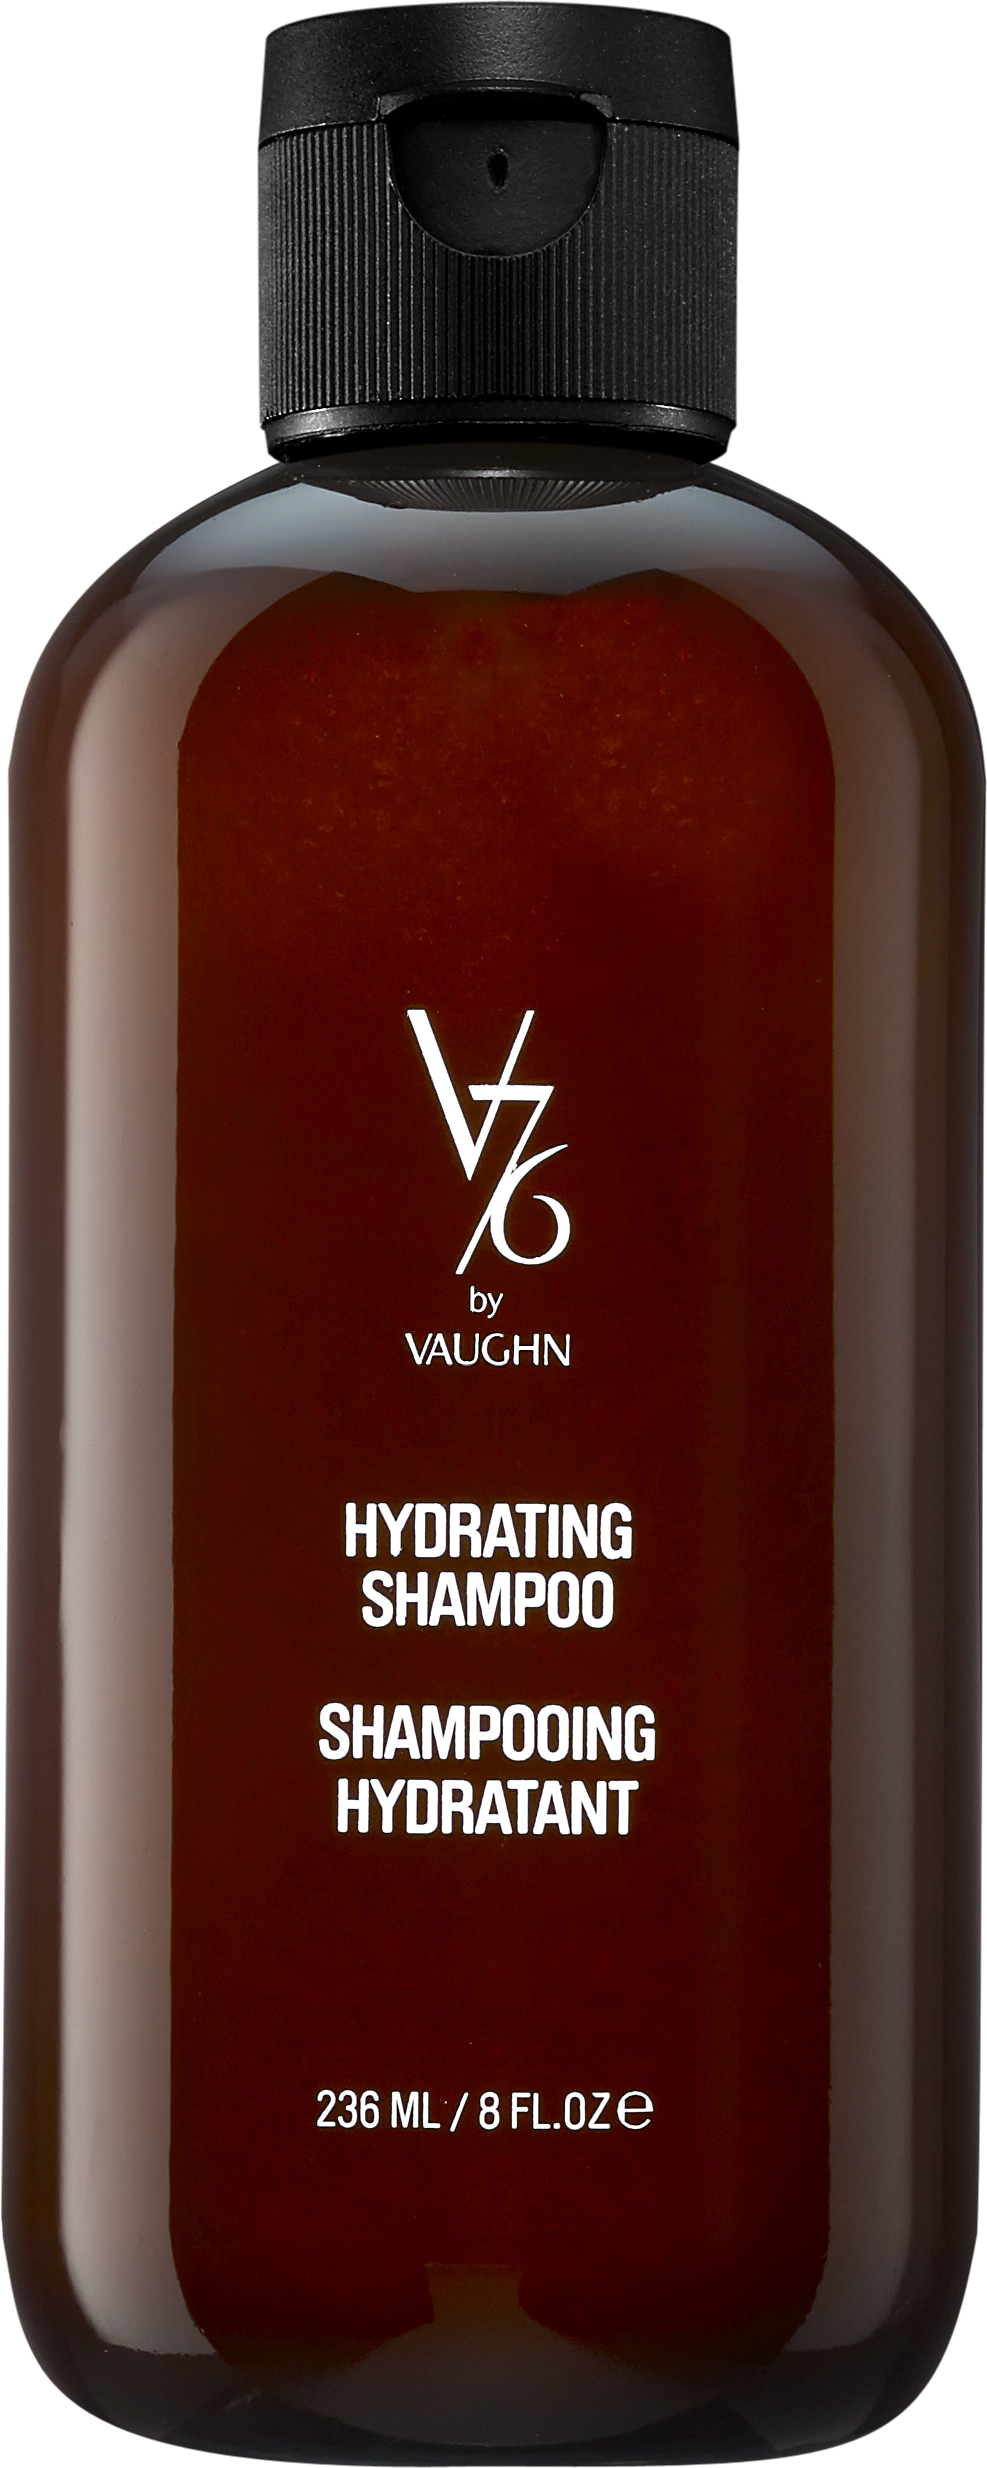 V76 by Vaughn Hydrating Shampoo 236ml